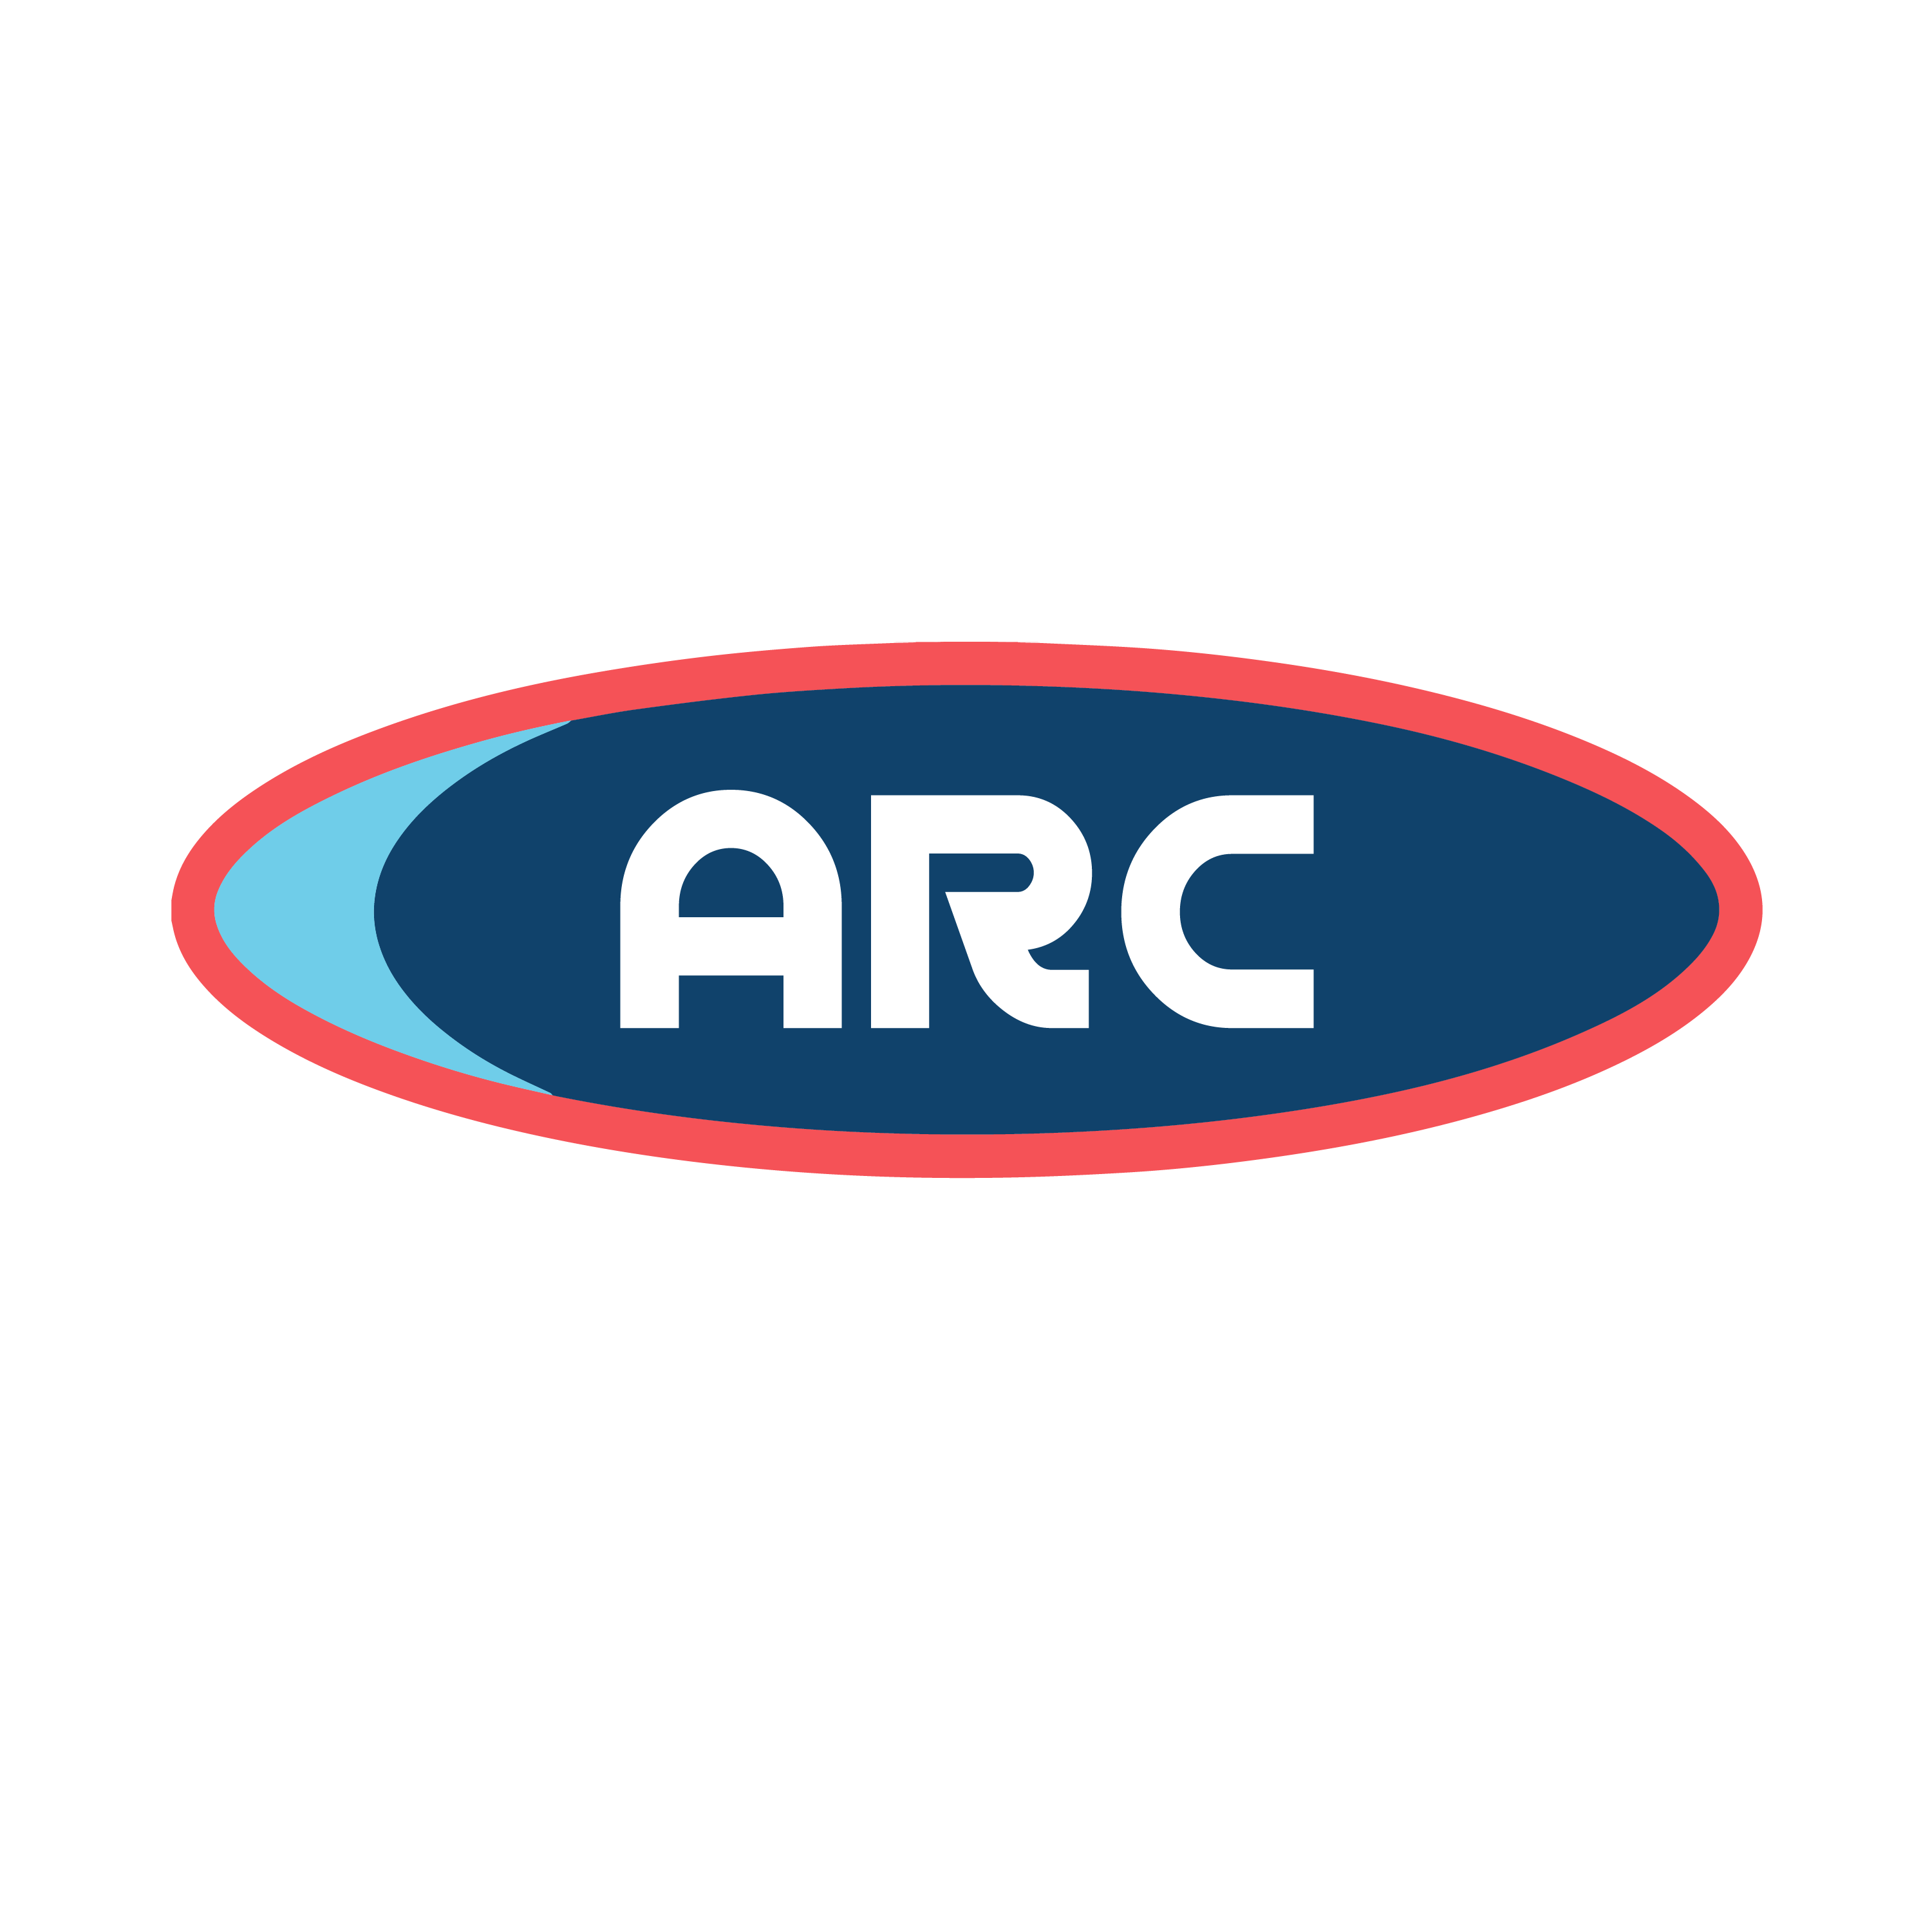 ARC Manufacturing Ltd